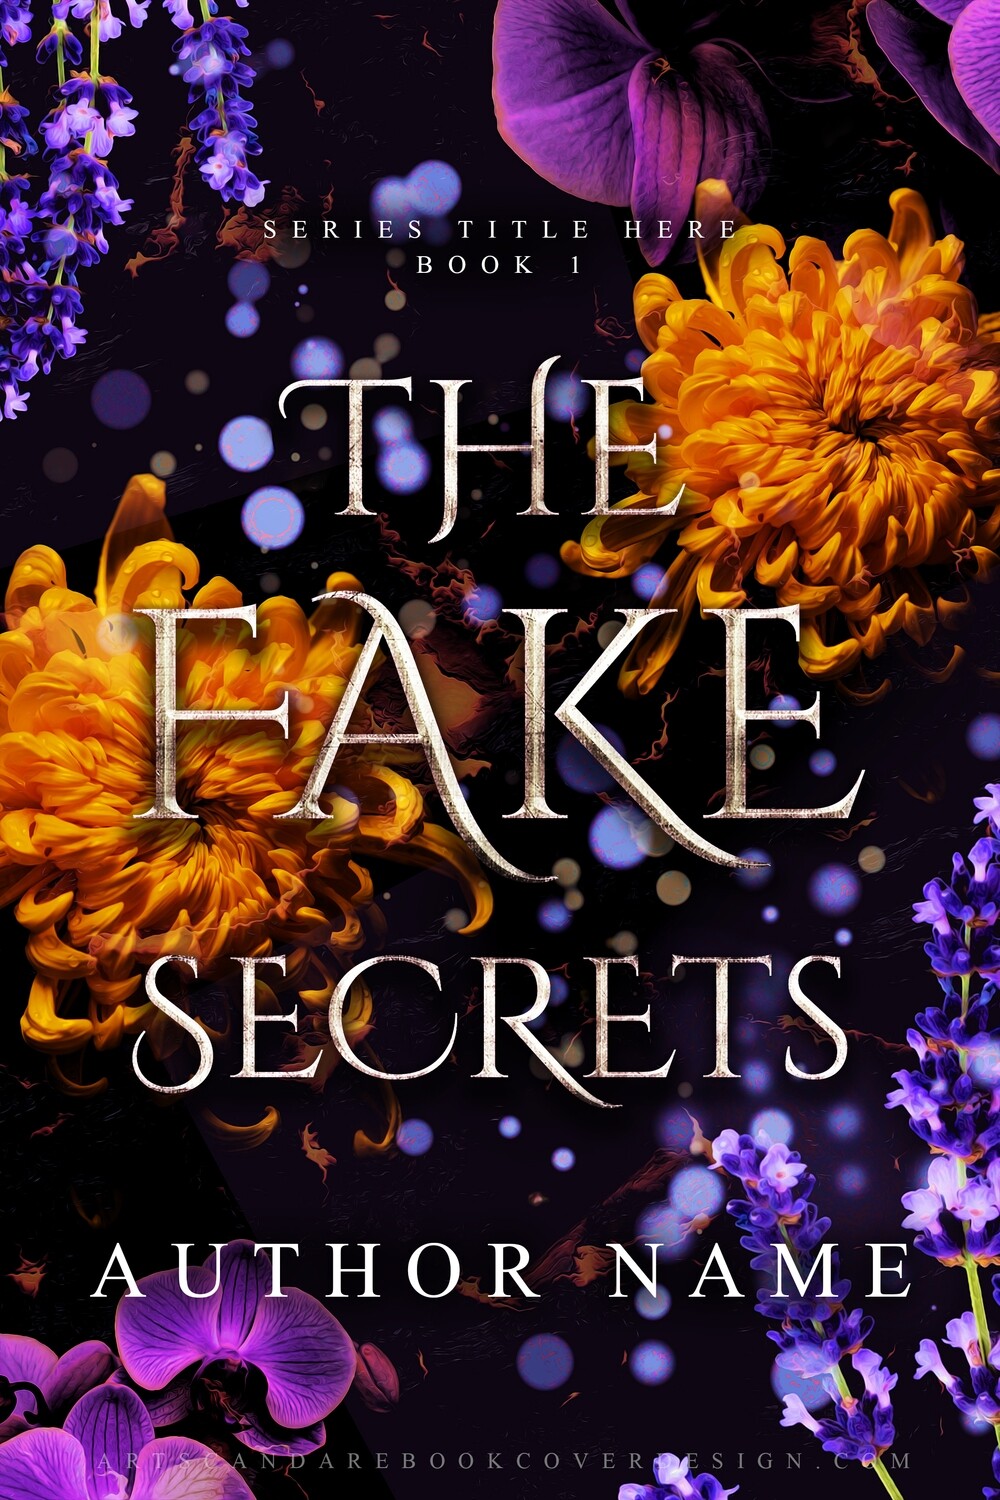 THE FAKE SECRETS